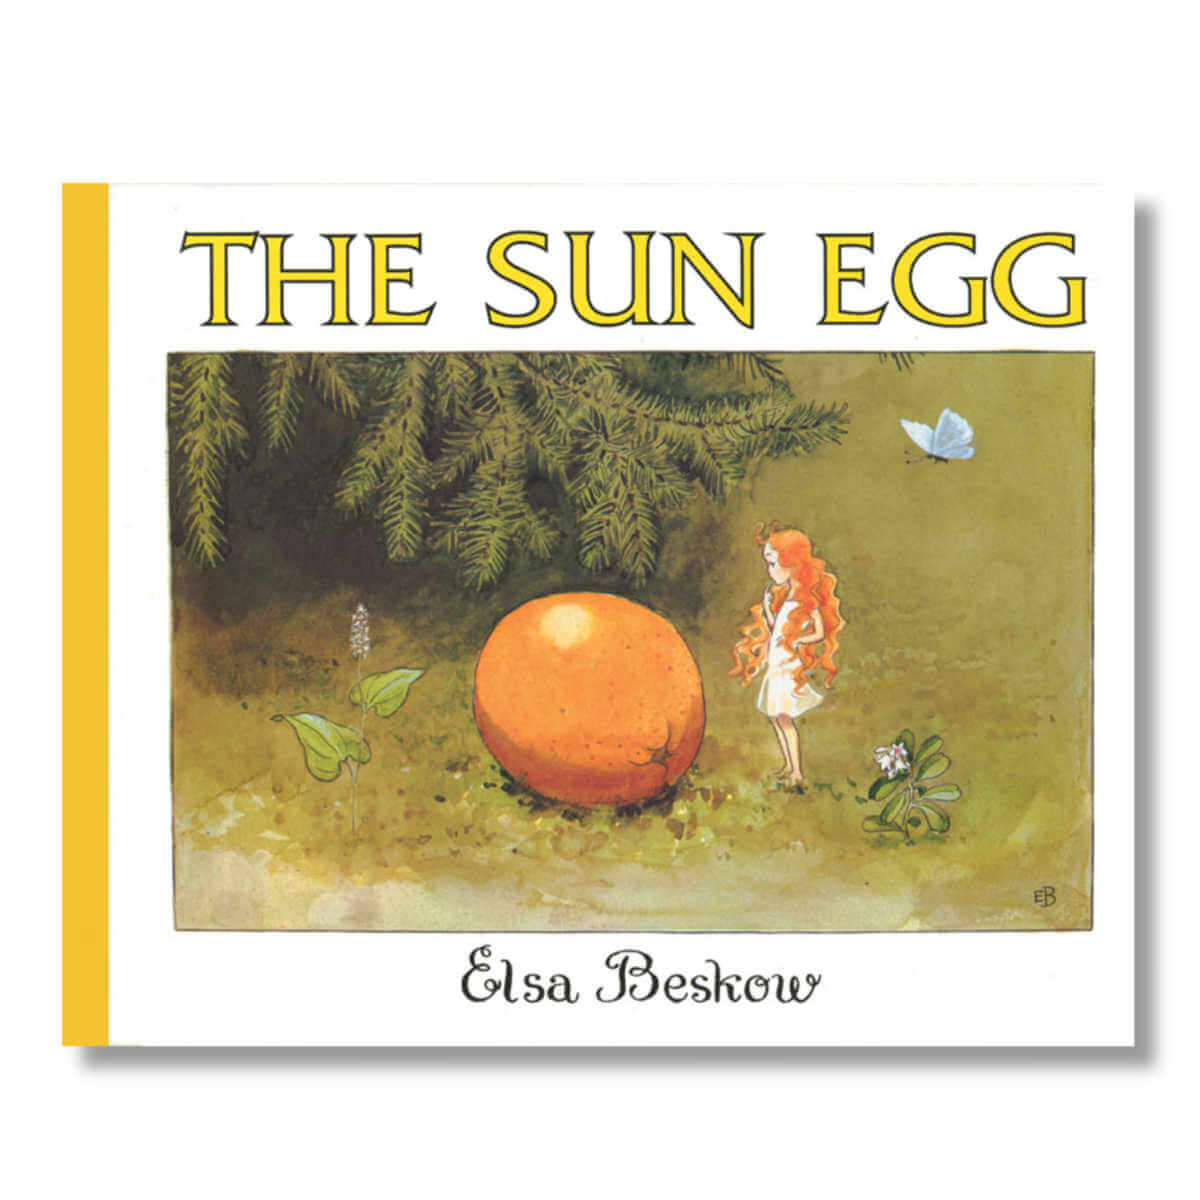 The sun egg chiidren's book by elsa beskow